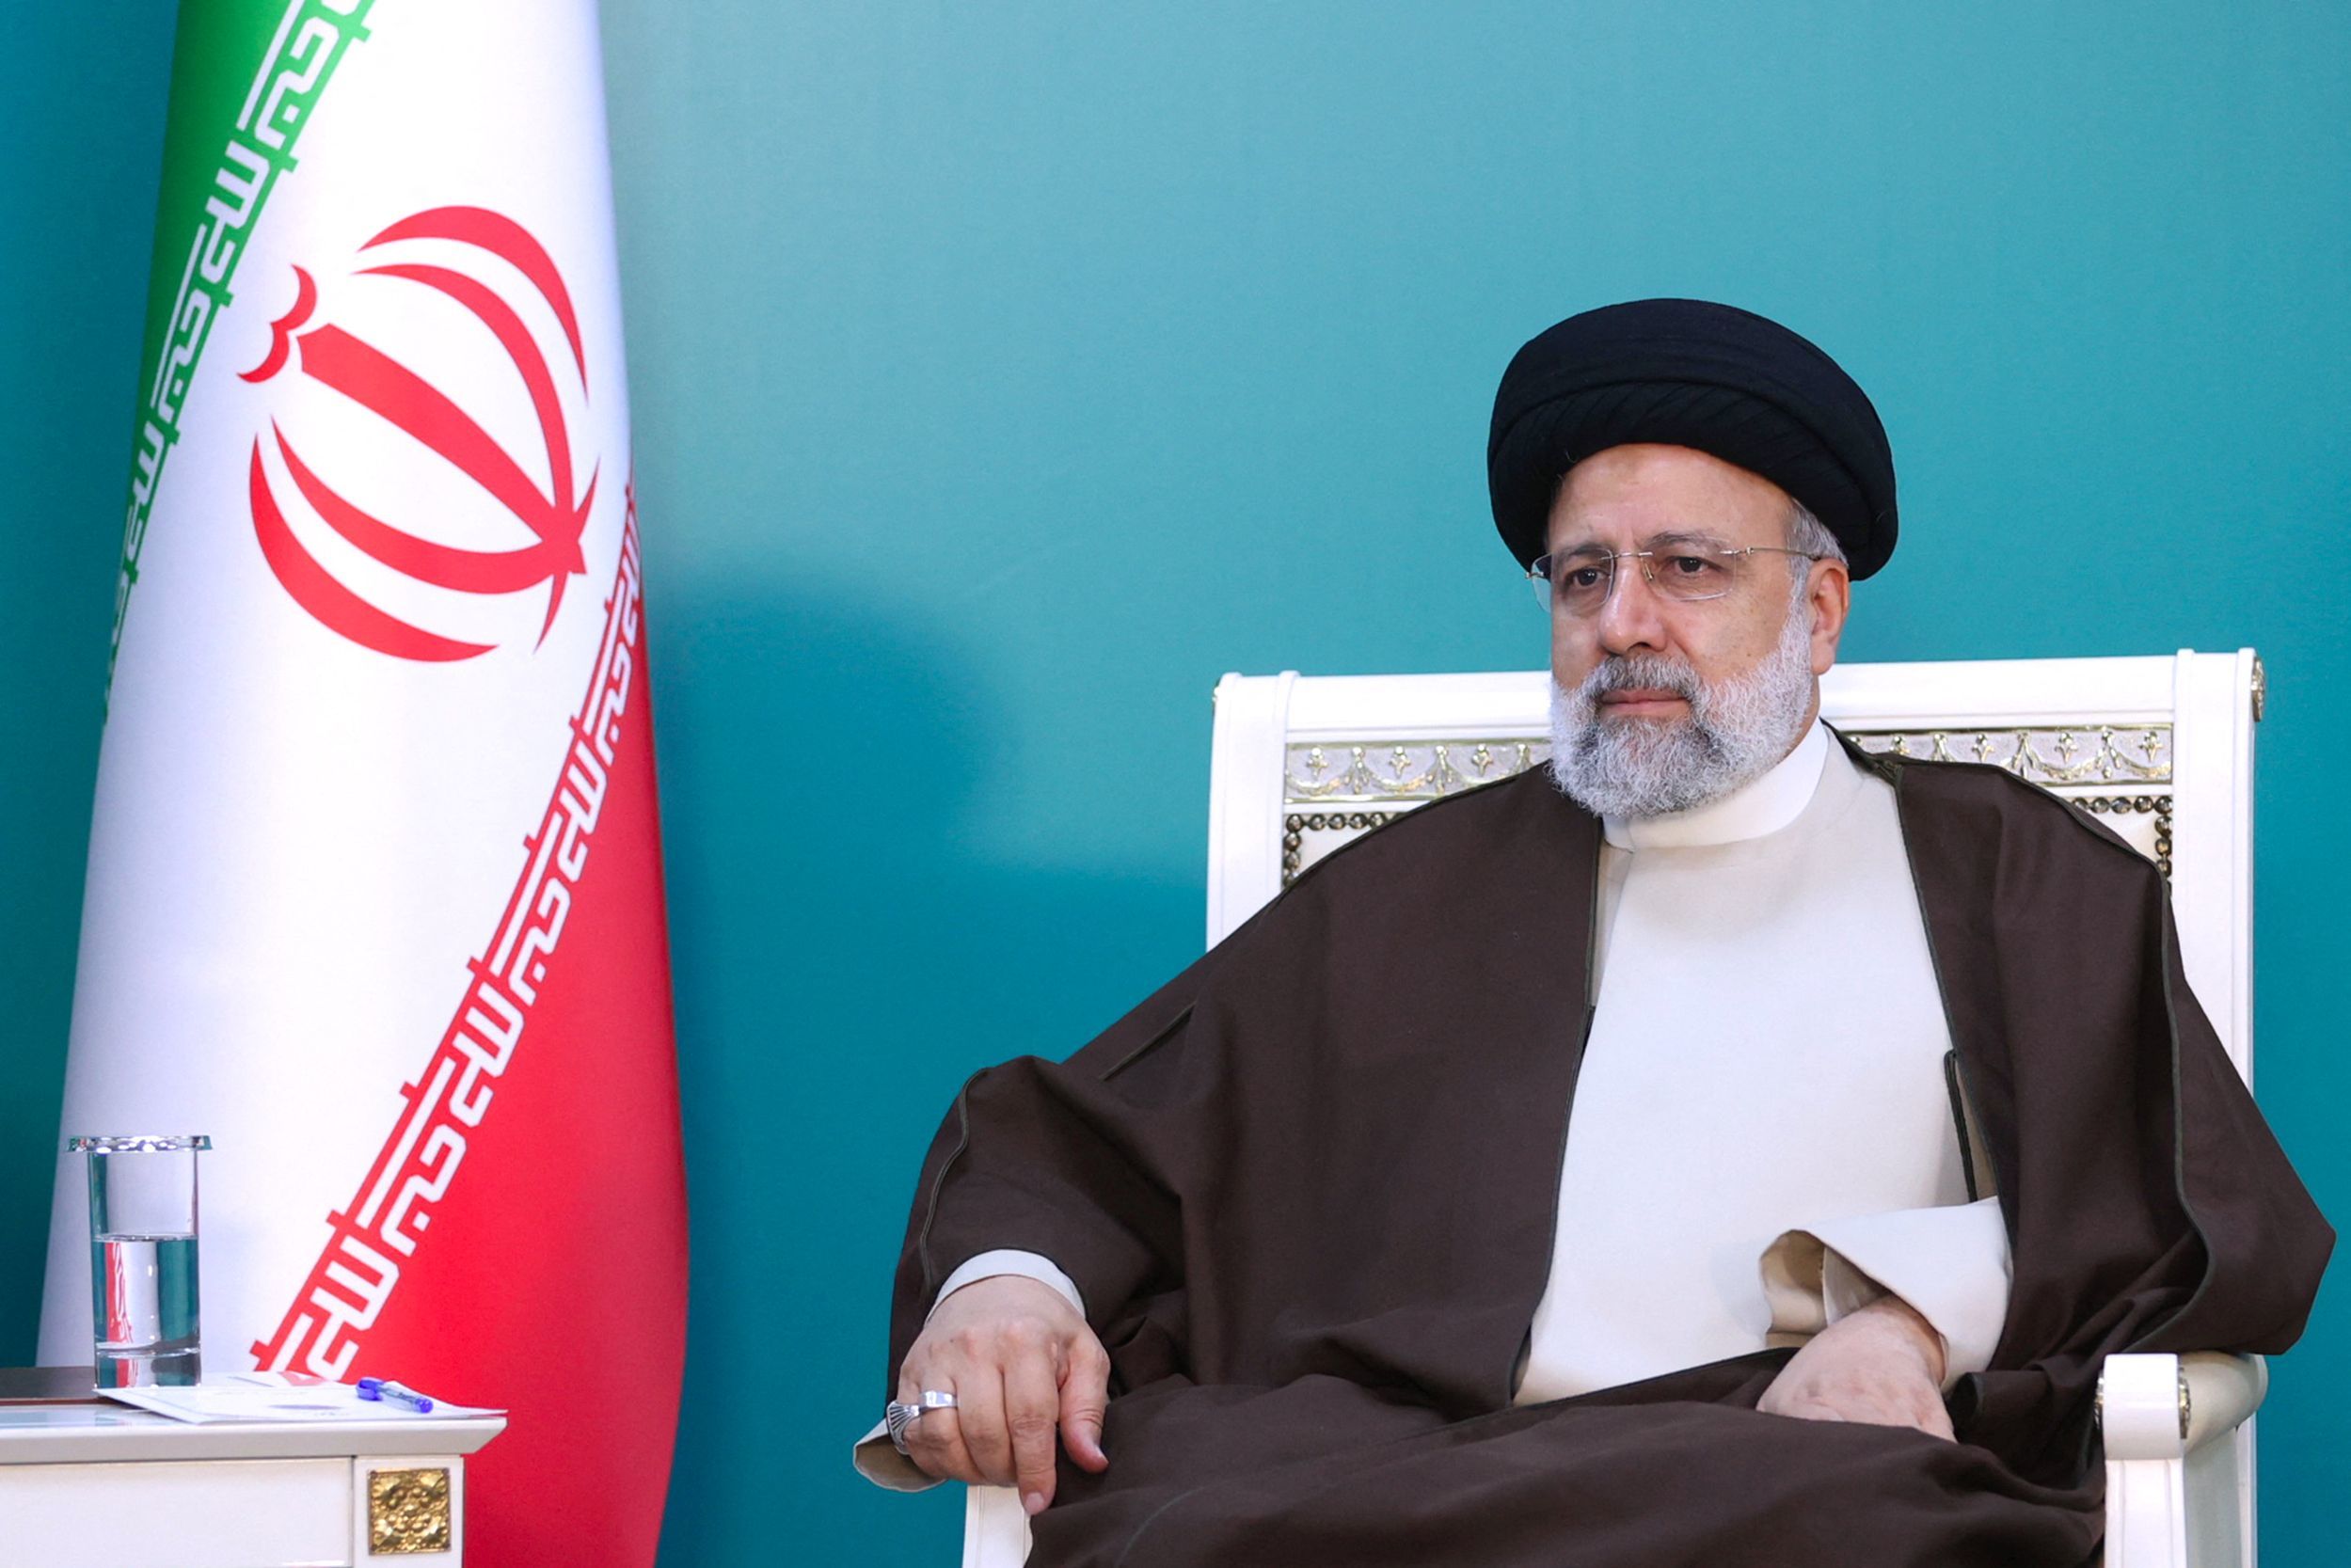 De Iraanse president Ebrahim Raisi dood